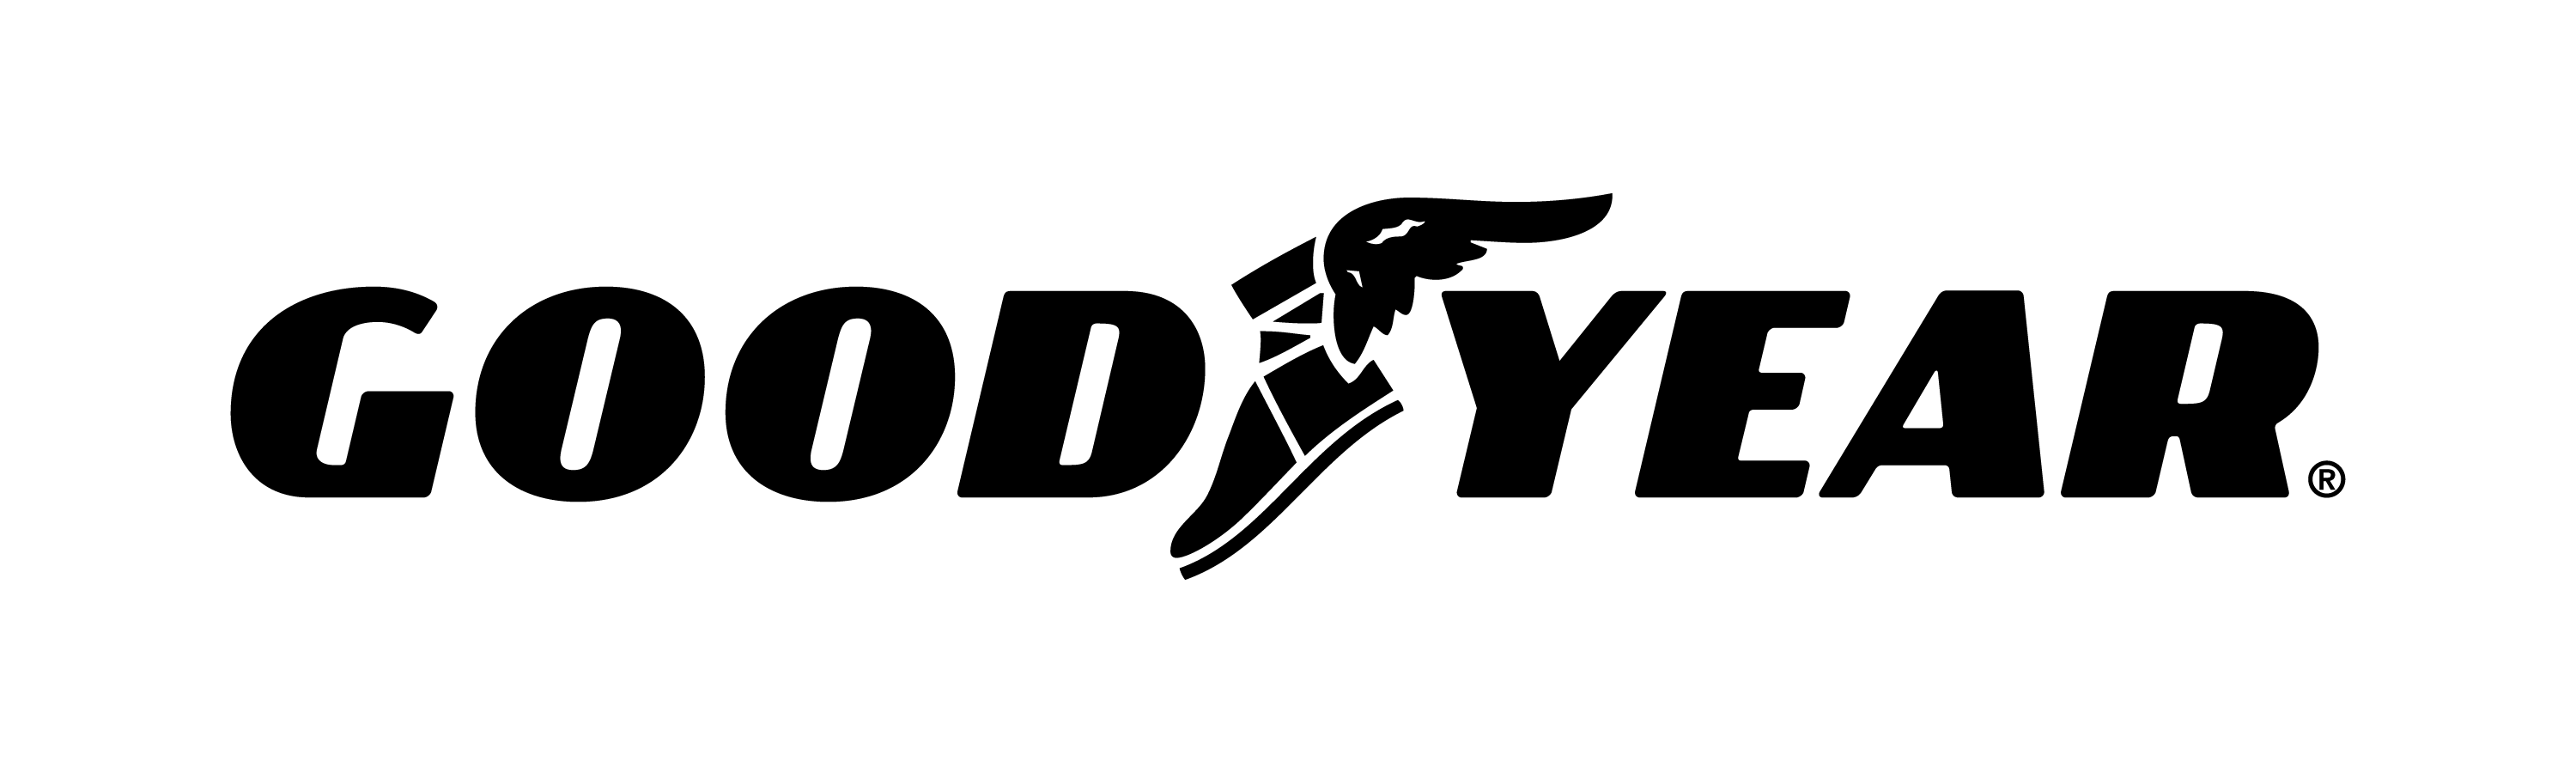 Goodyear Logo - Goodyear Logo Media Gallery | Goodyear Corporate